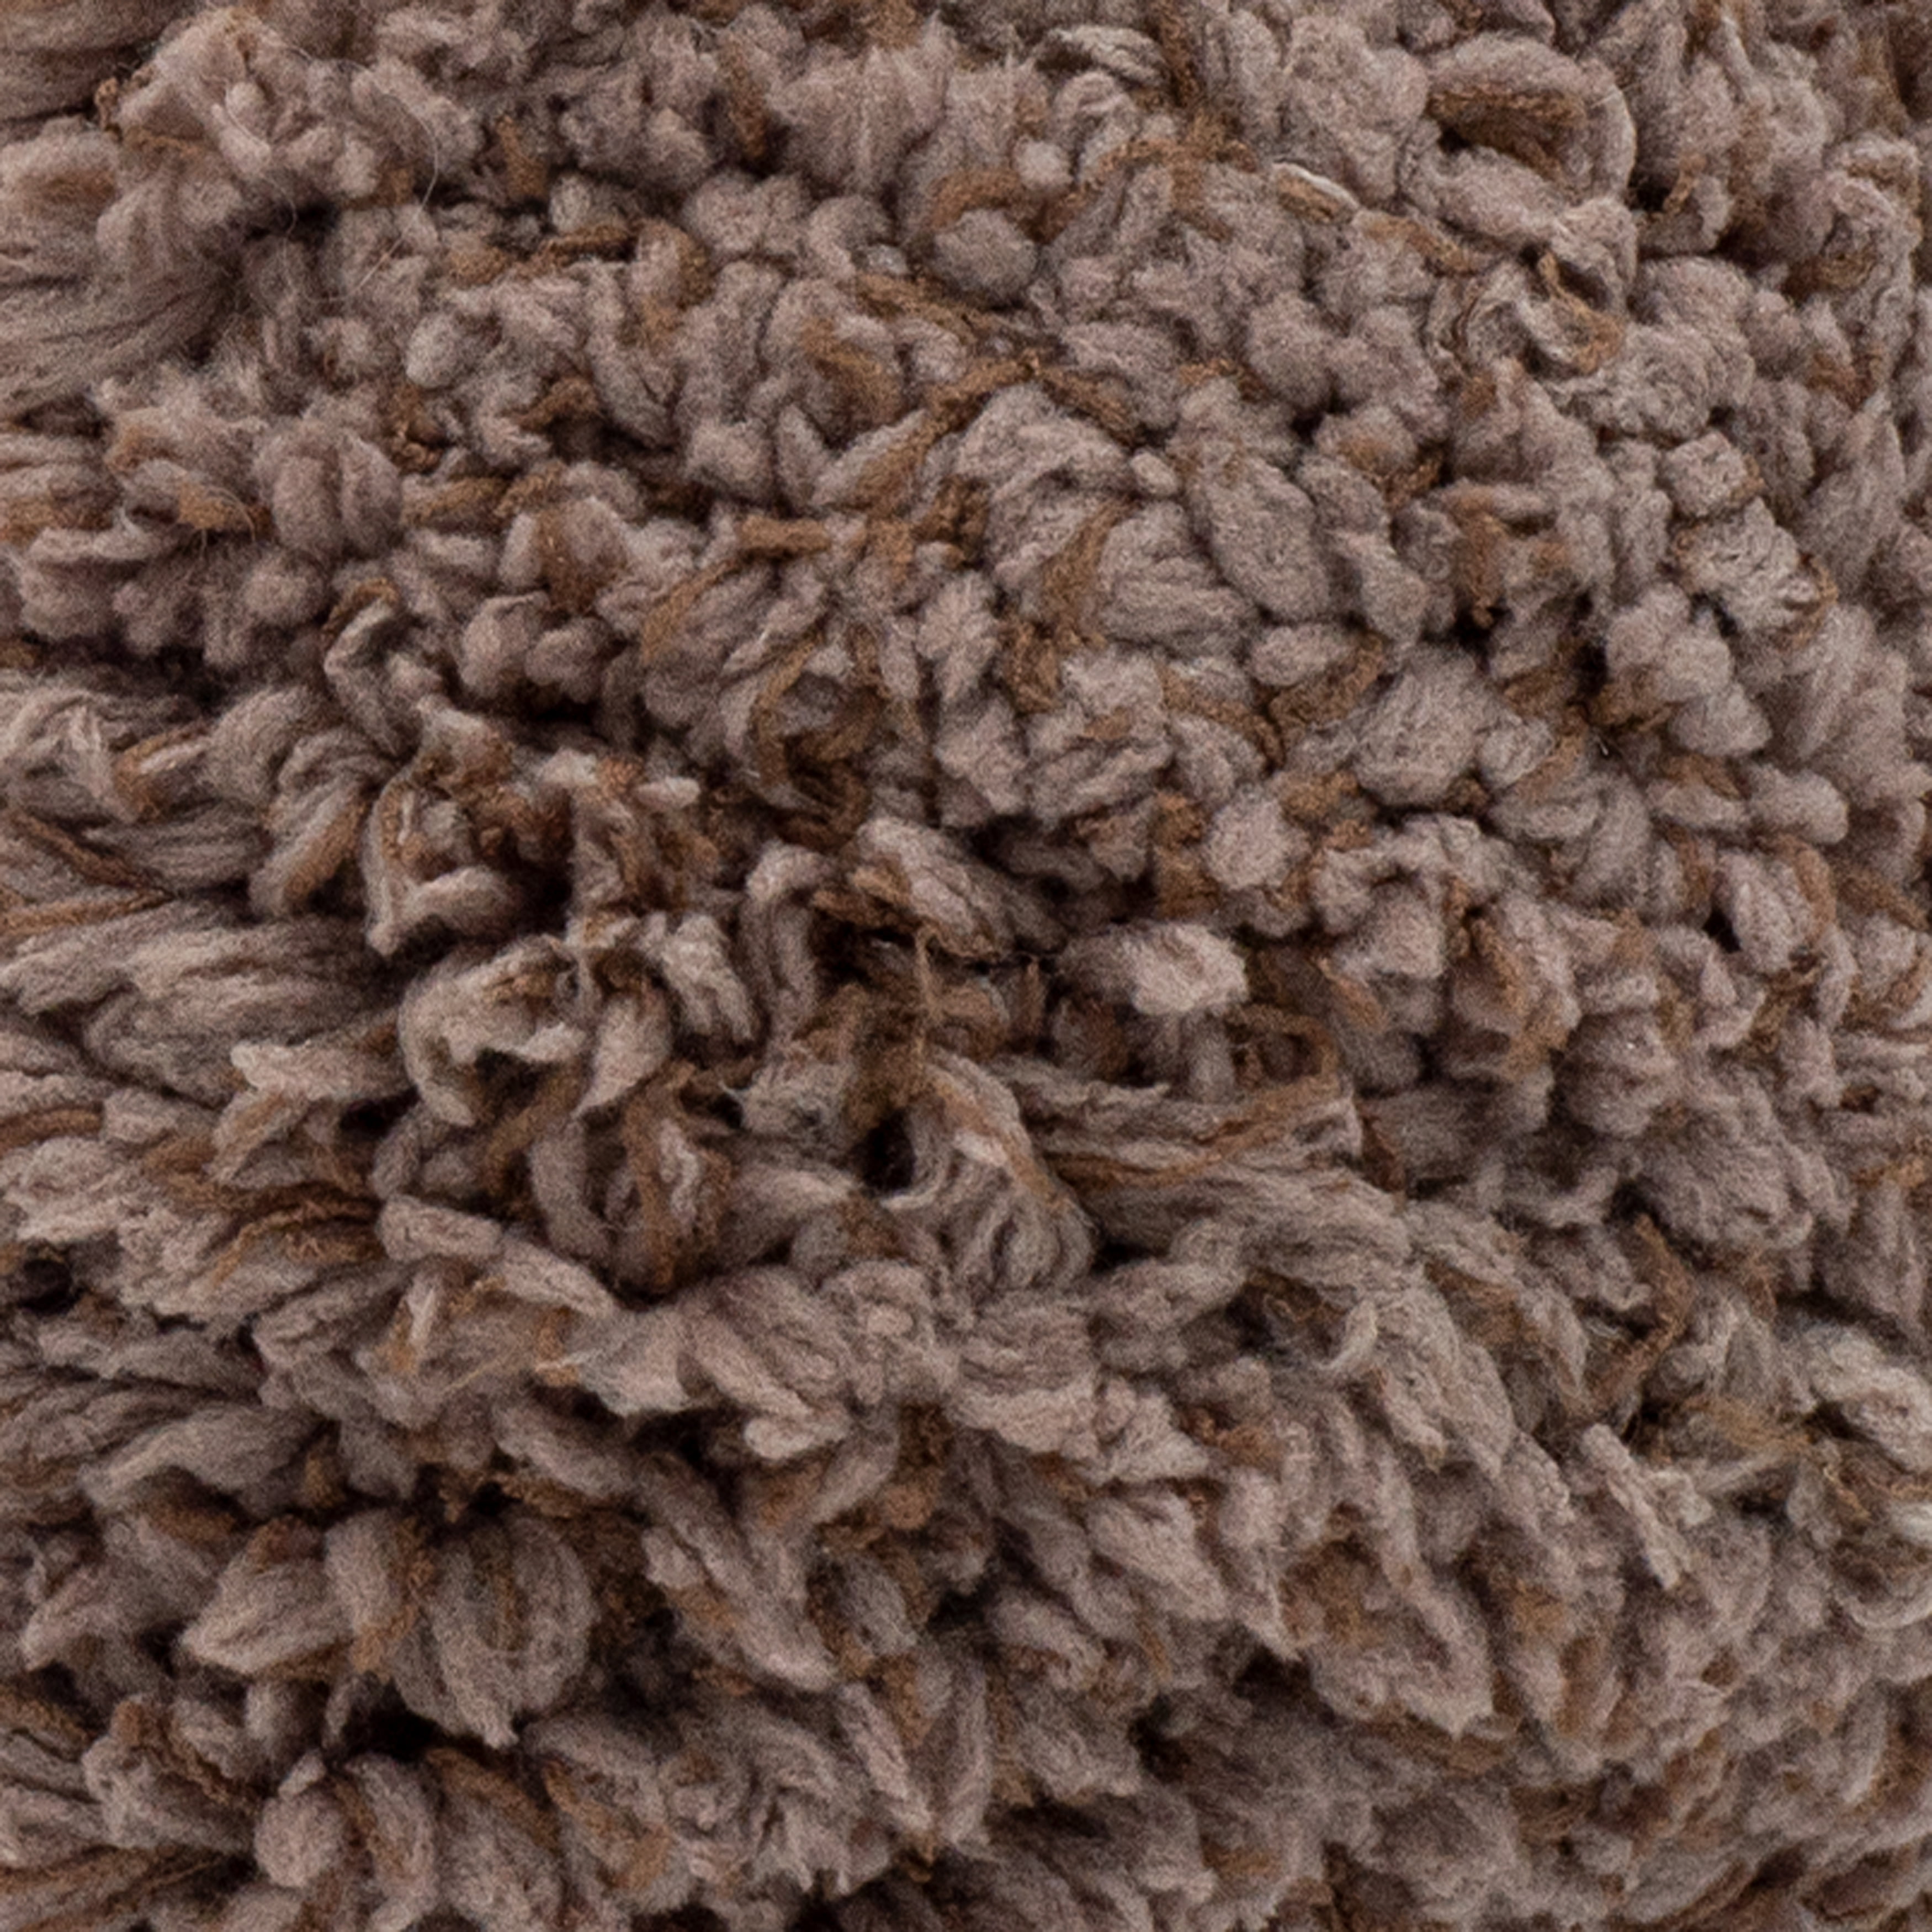 Lion Brand Yarn Go for Fleece Sherpa Jumbo Yarn for Knitting, Crocheting, and Crafting, 3 Pack, Navy